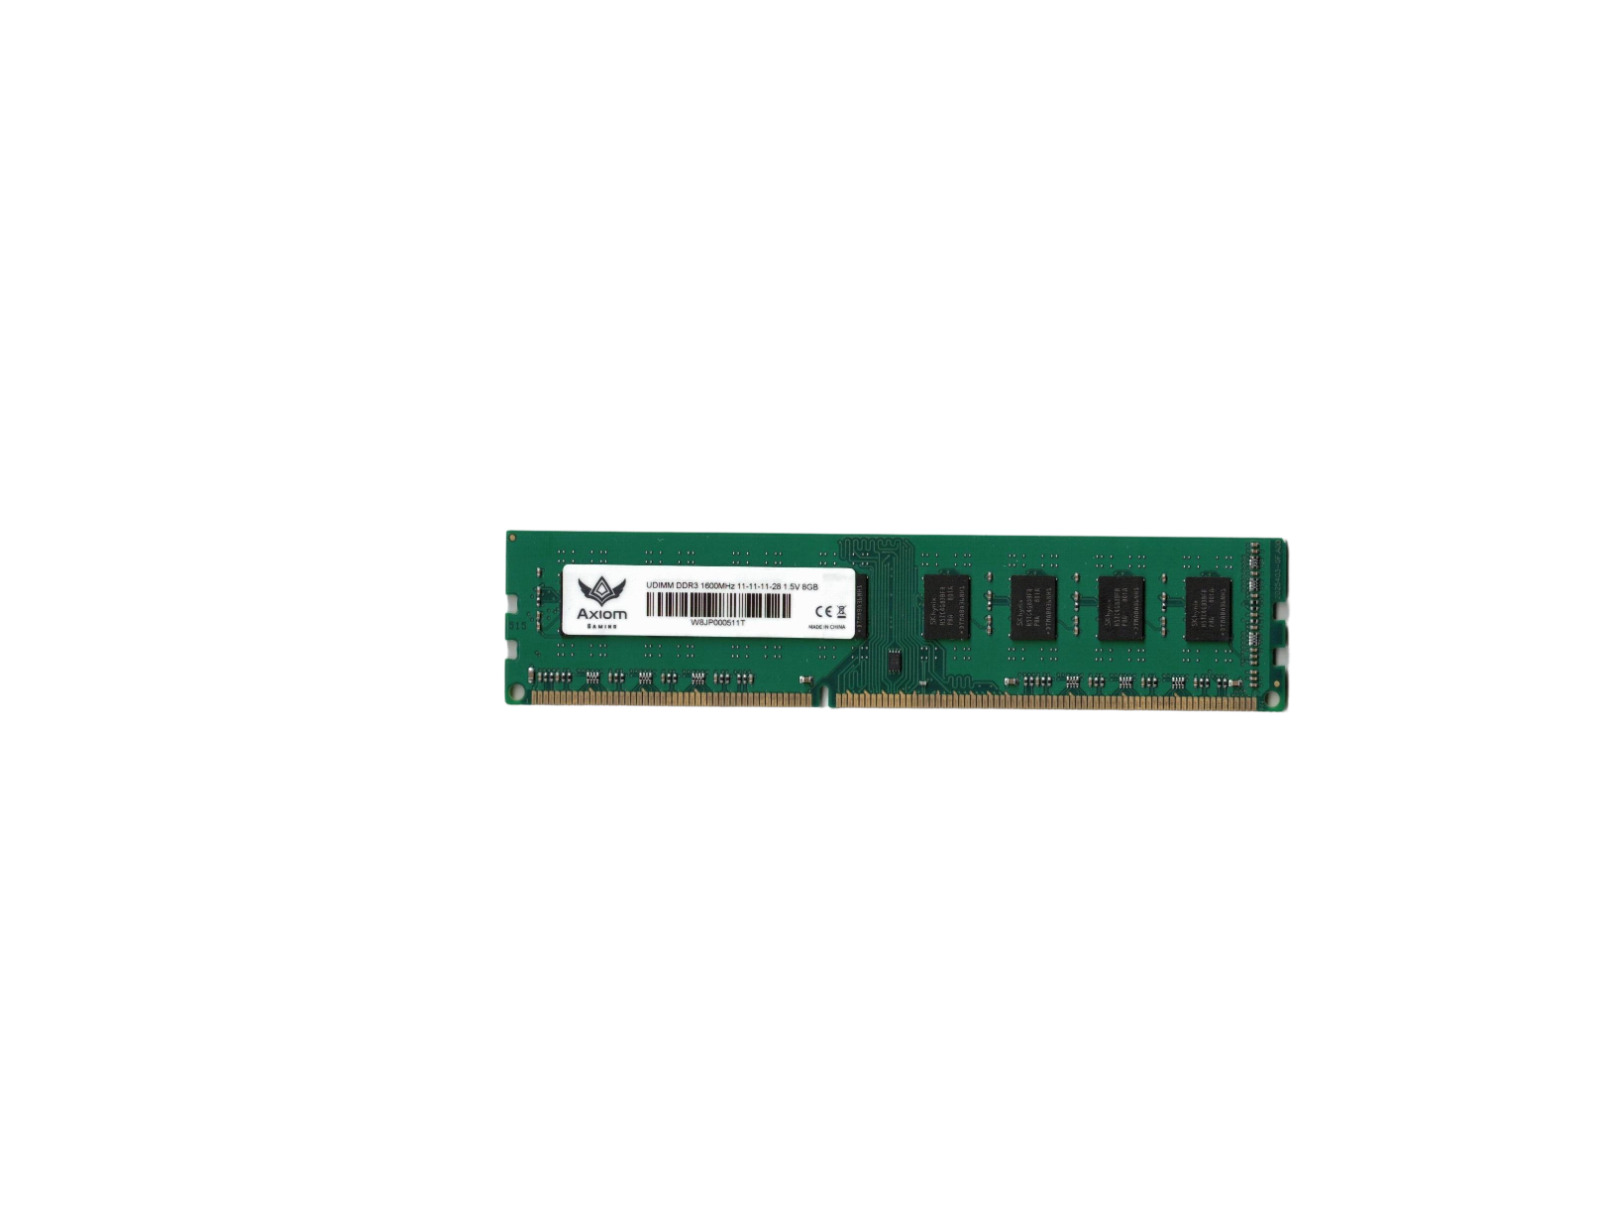 Axiom Gaming RAM Memory Kit, 8GB DDR3 1600MHz, 11-11-11-28 Timings, for PC, Comp